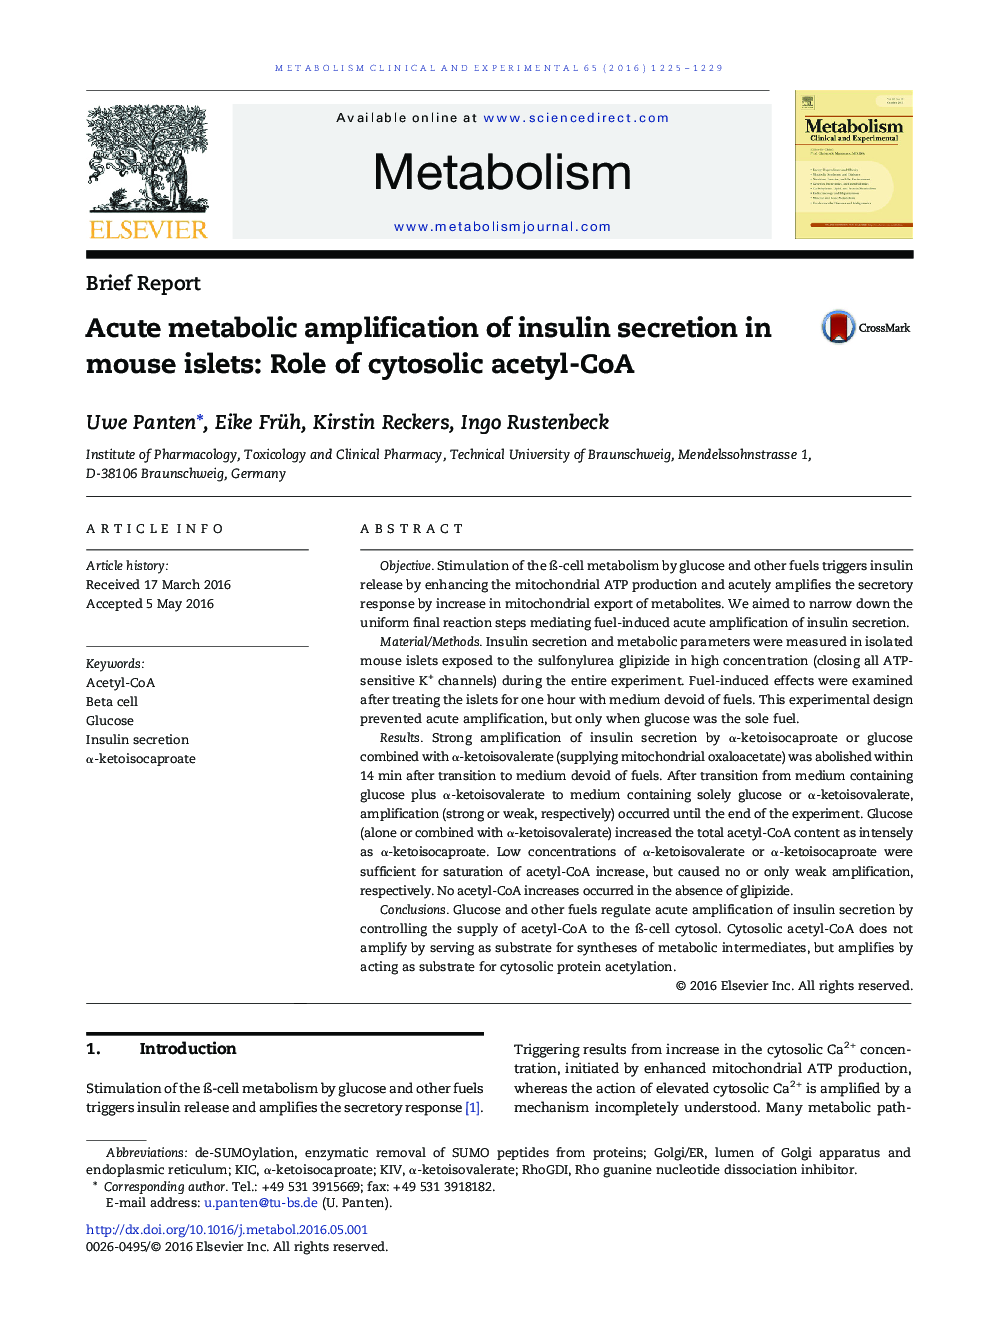 گزارش مختصر تشخیص متابولیسم پایدار ترشح انسولین در جزایر ماوس: نقش سیتوزول استیل کولا 